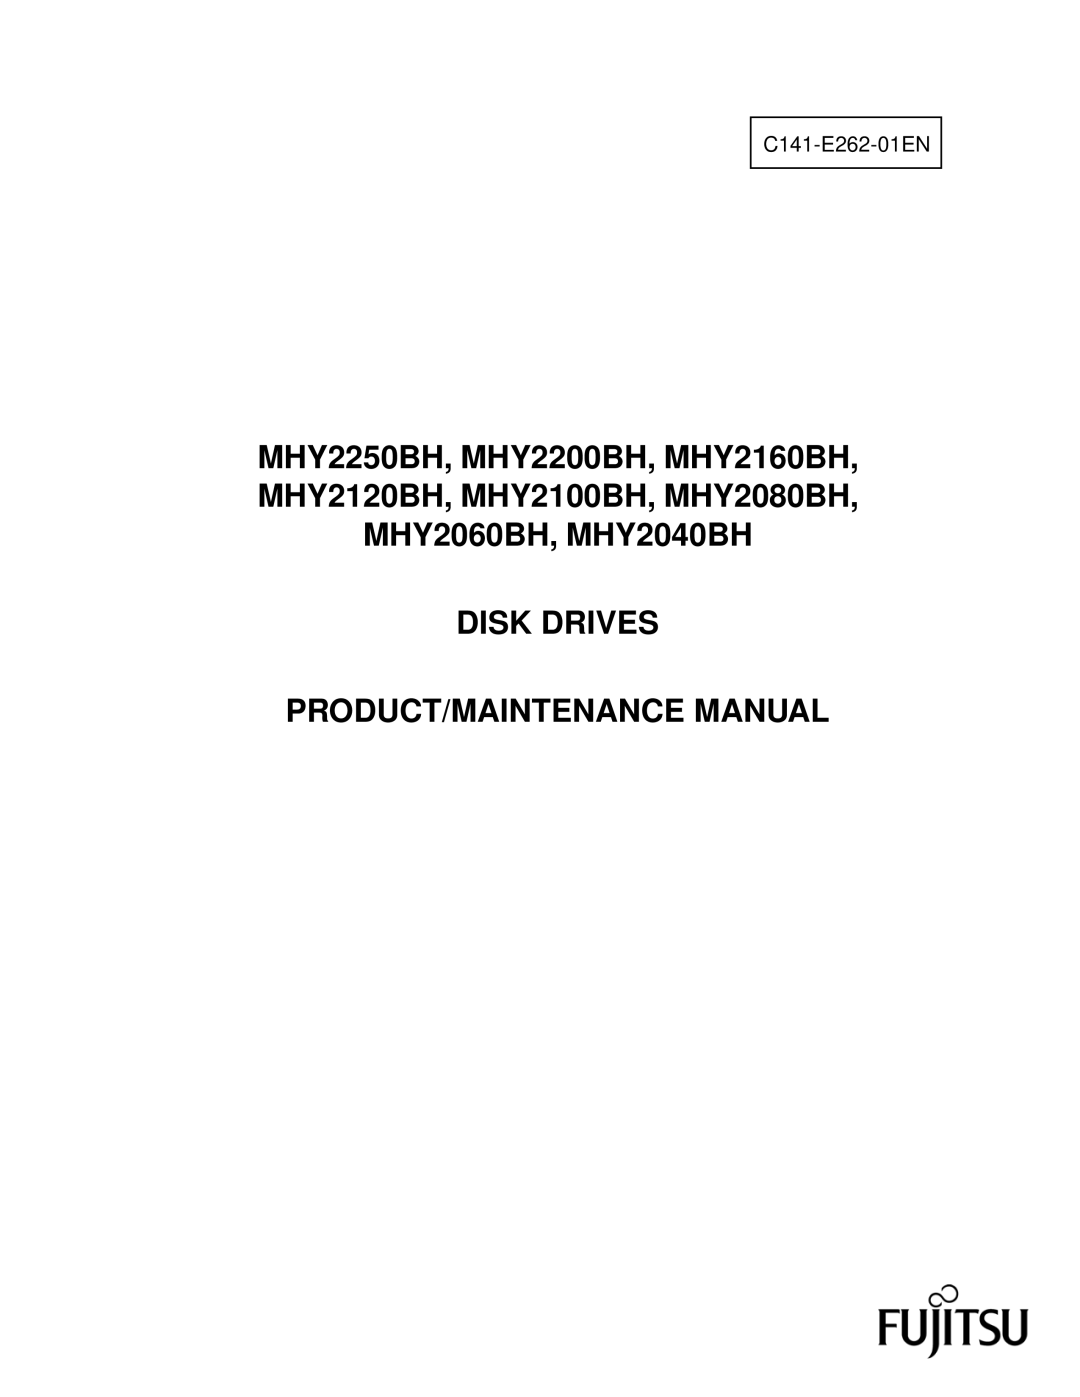 Fujitsu MHY2200BH, MHY2160BH, MHY2250BH, MHY2100BH, MHY2120BH, MHY2080BH manual Disk Drives PRODUCT/MAINTENANCE Manual 